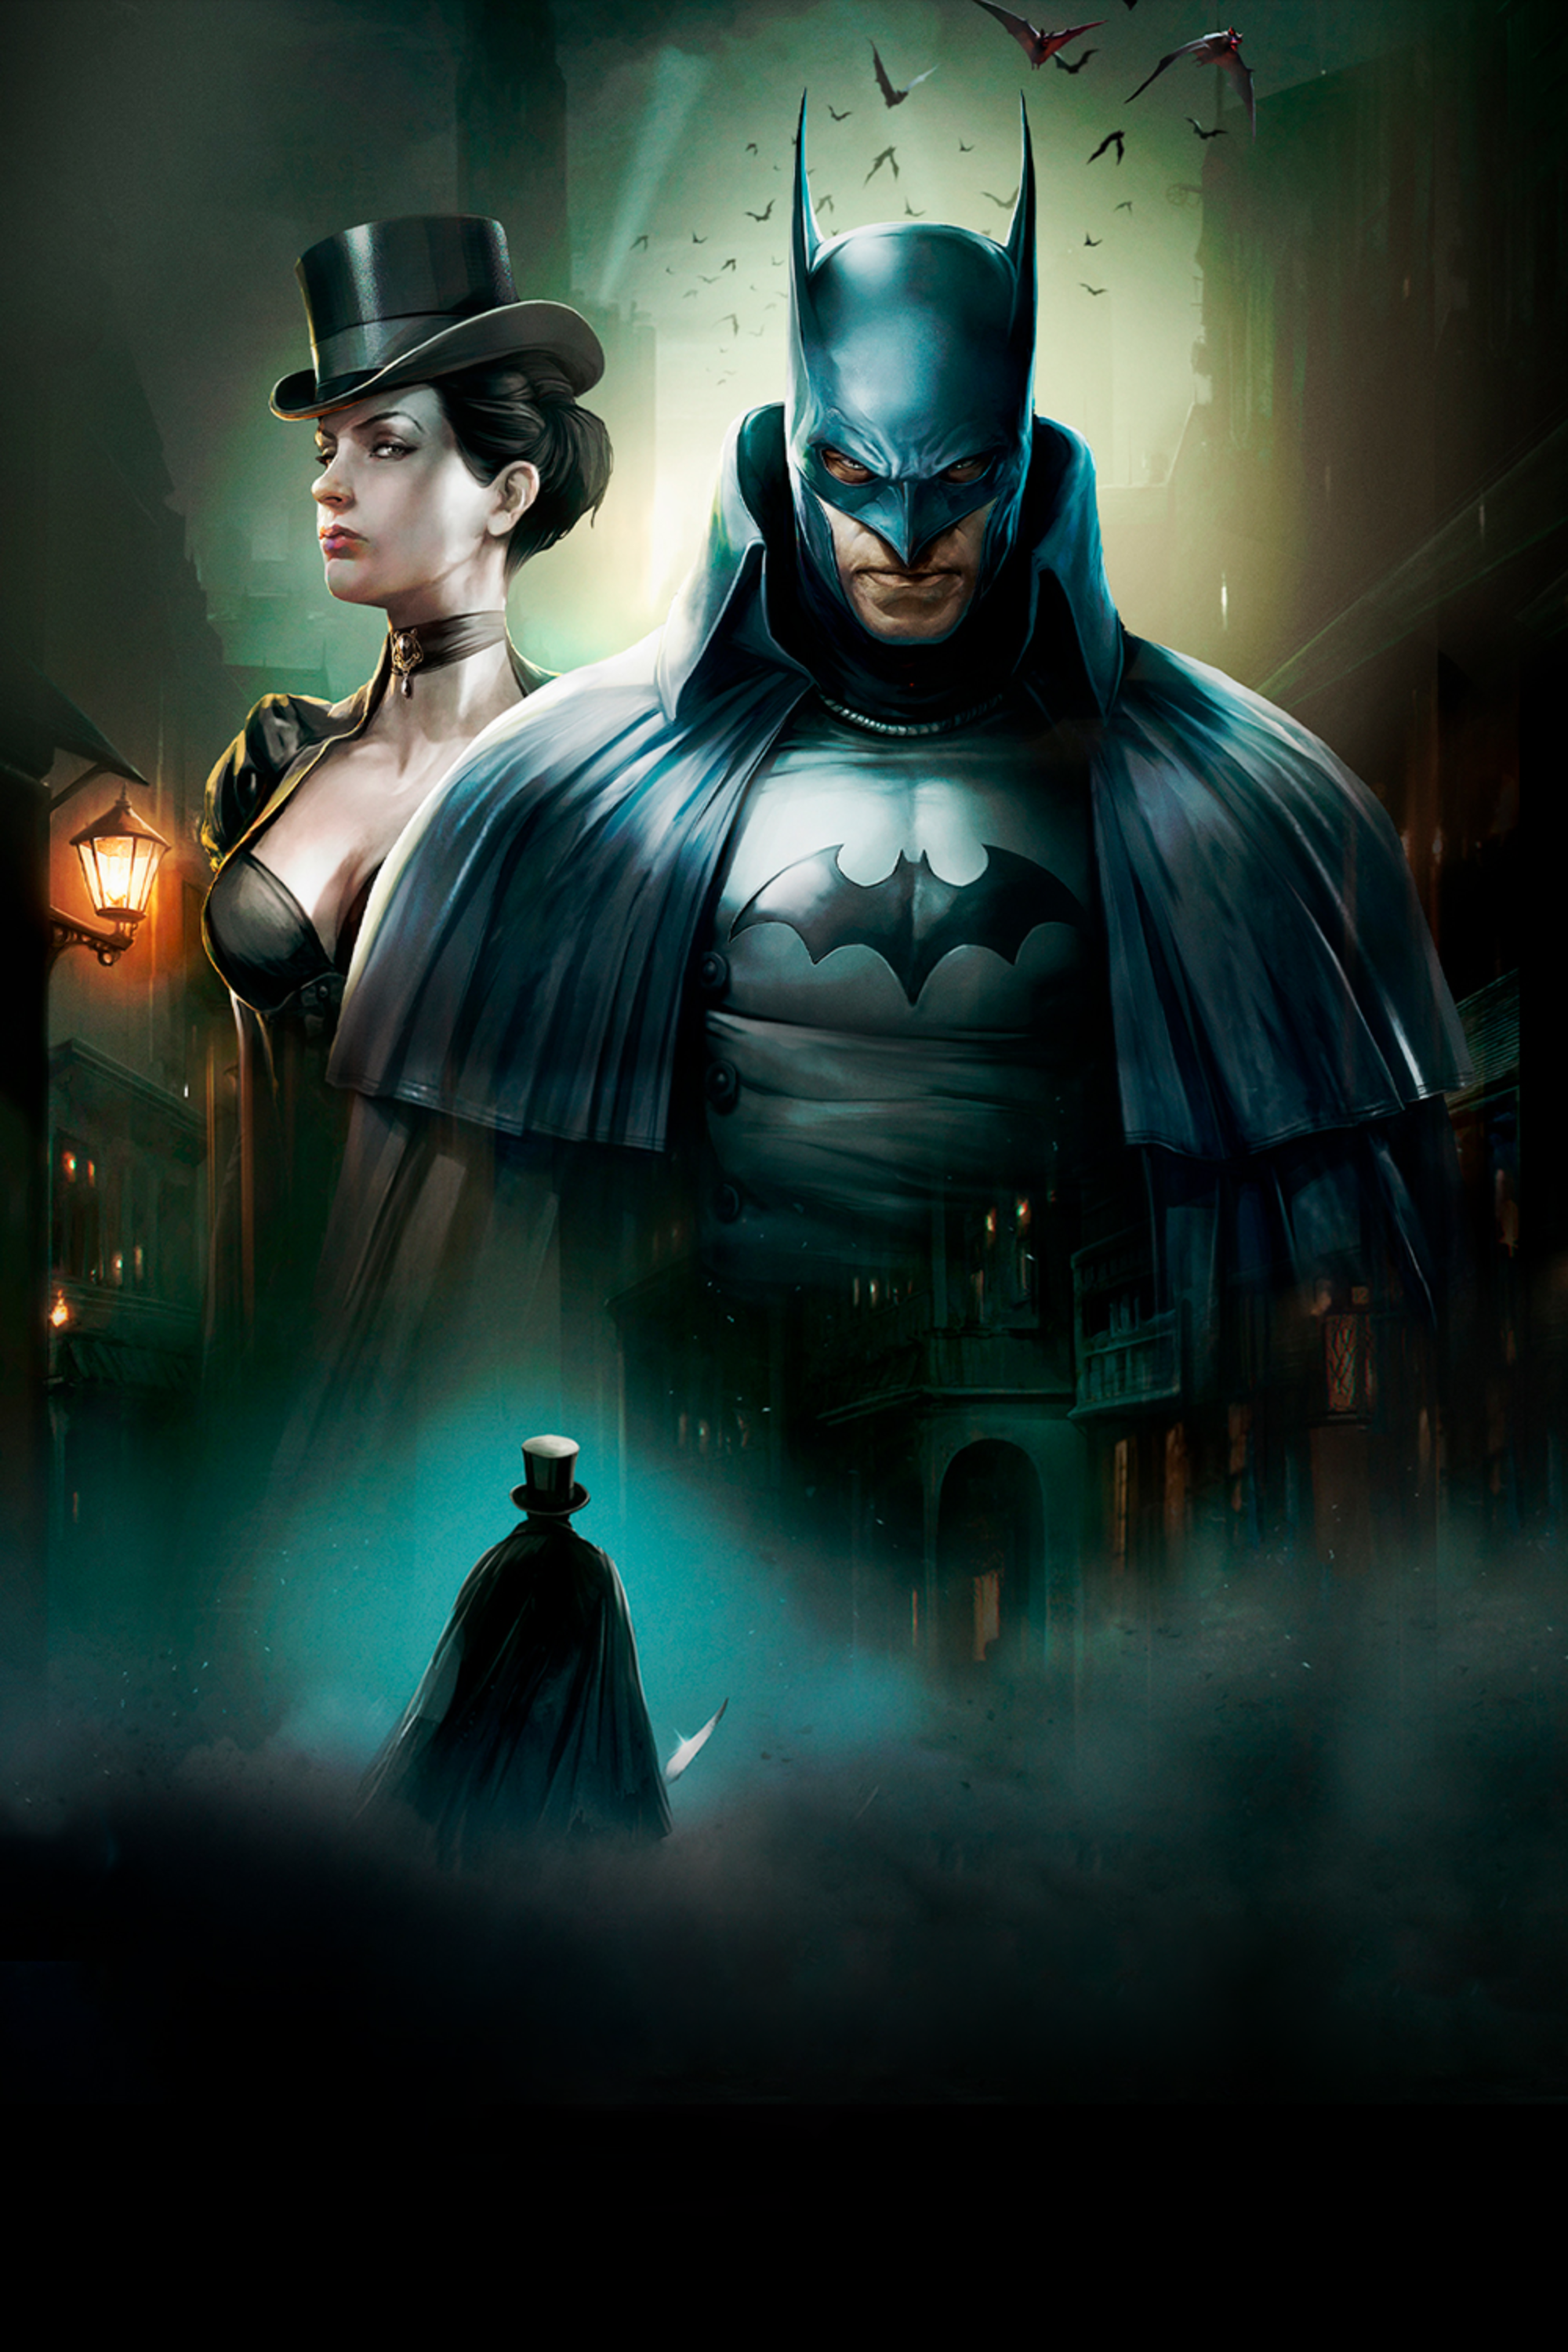 Batman Gotham By Gaslight by KahlanAmnelle on DeviantArt